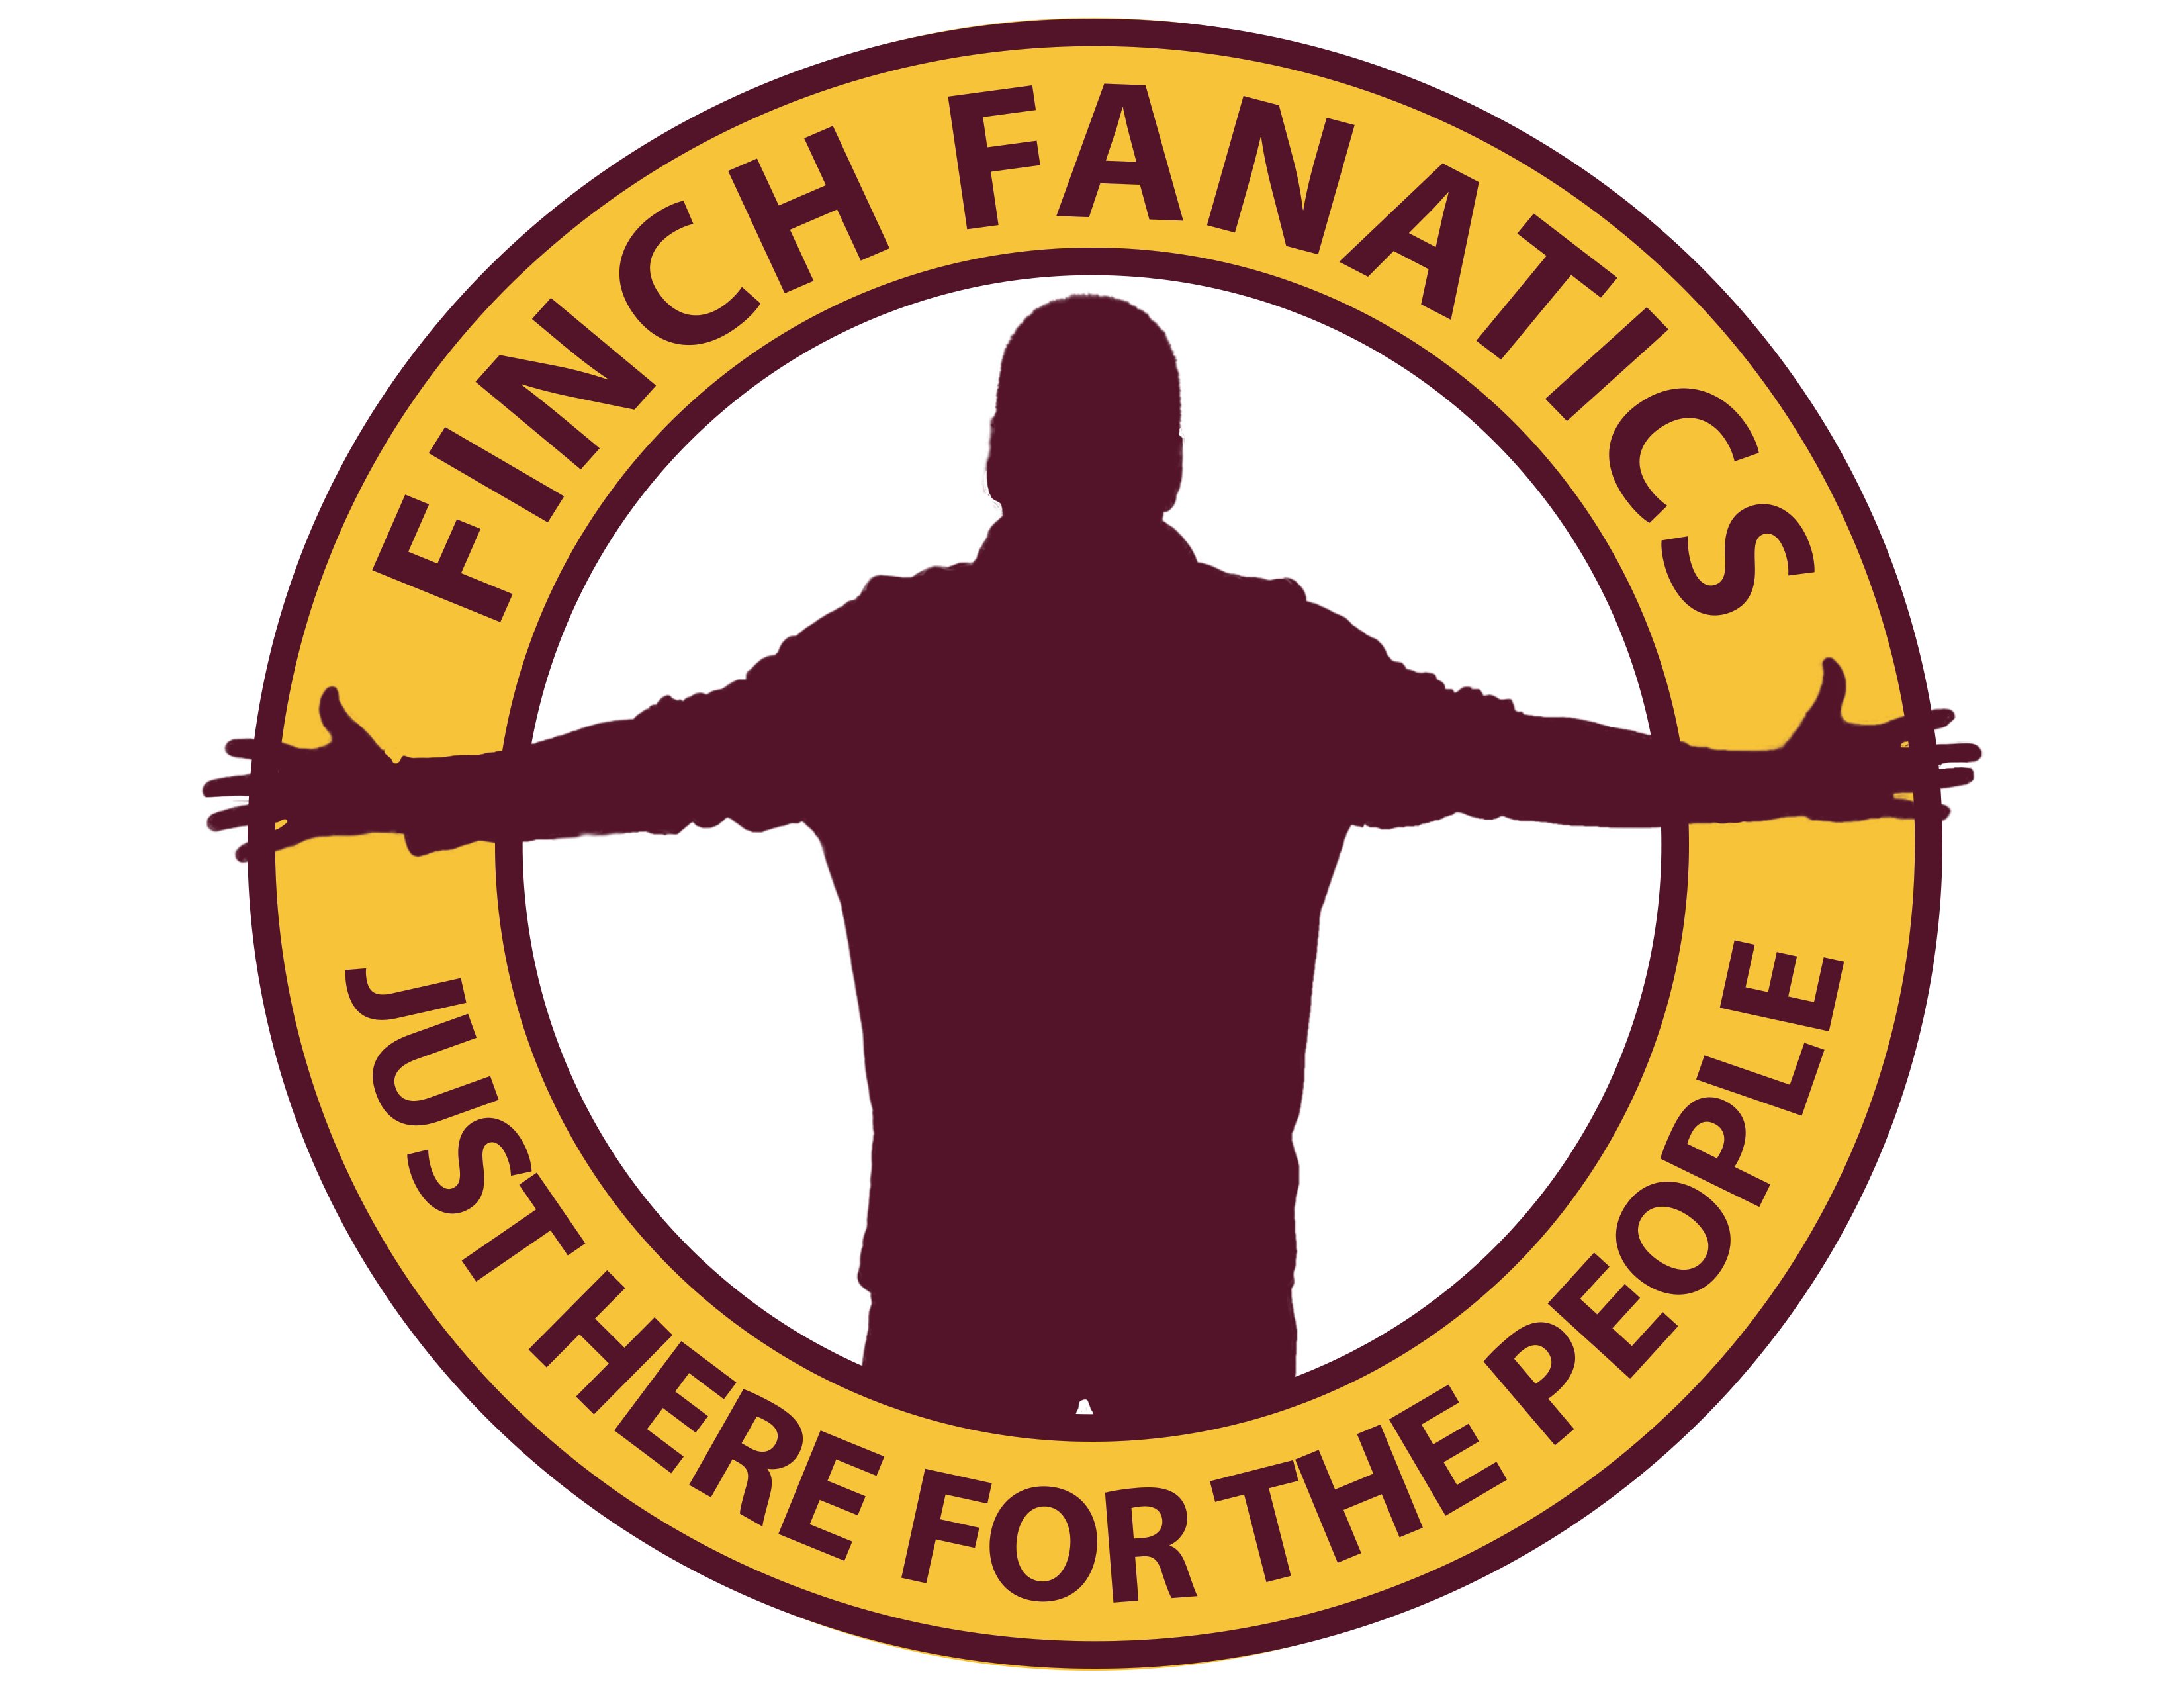 Finch Fanatics logo